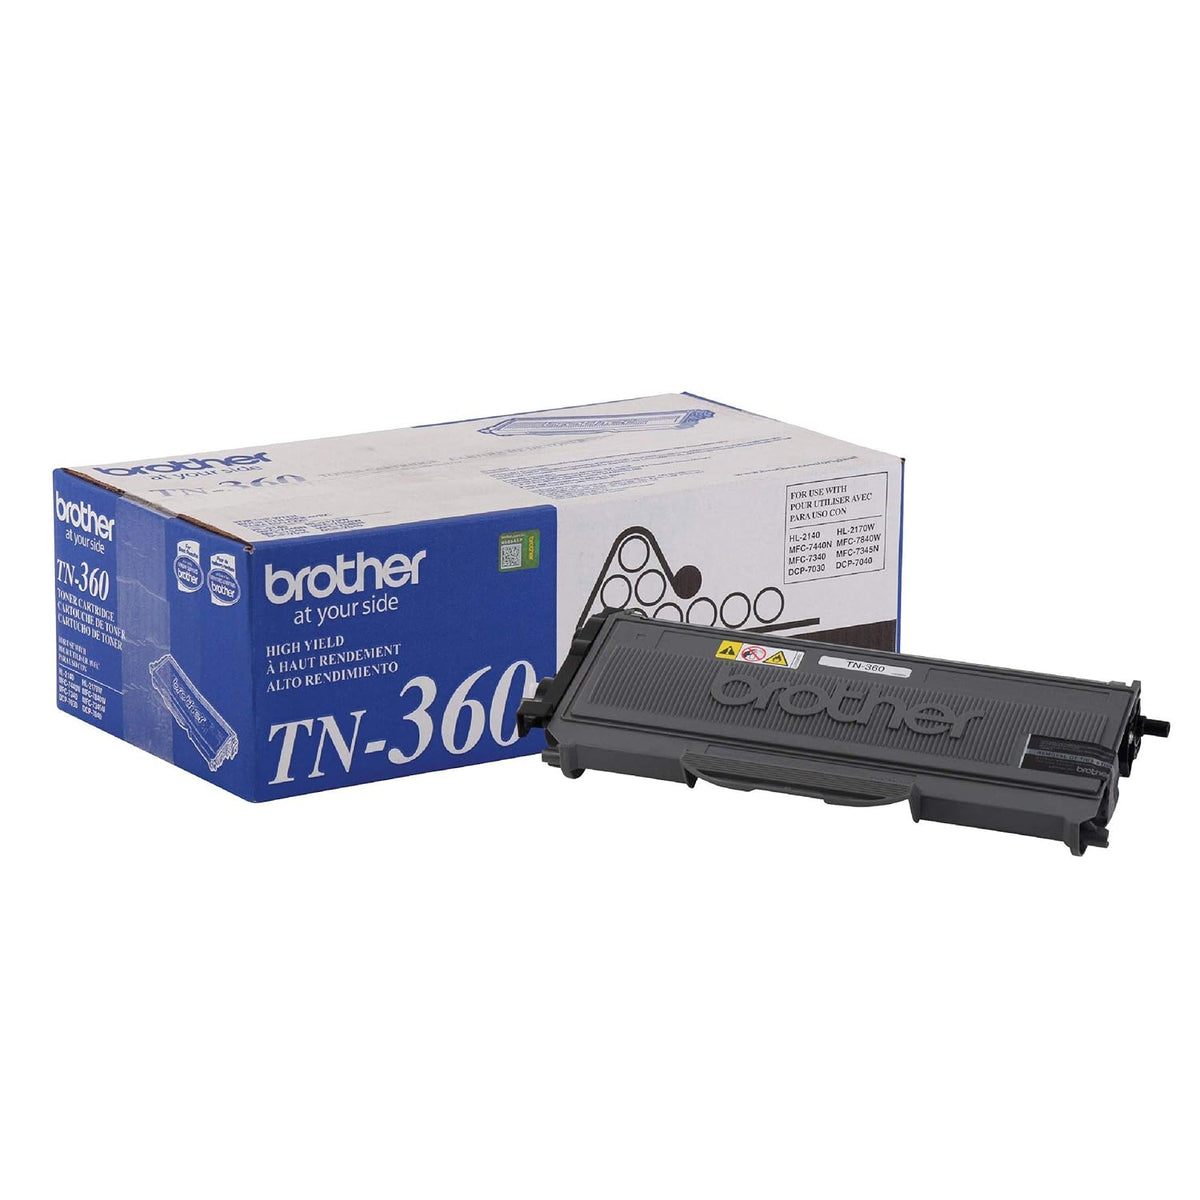 brother-dcp-7030-black-toner-cartridge-high-yield-genuine-oem-tn-360